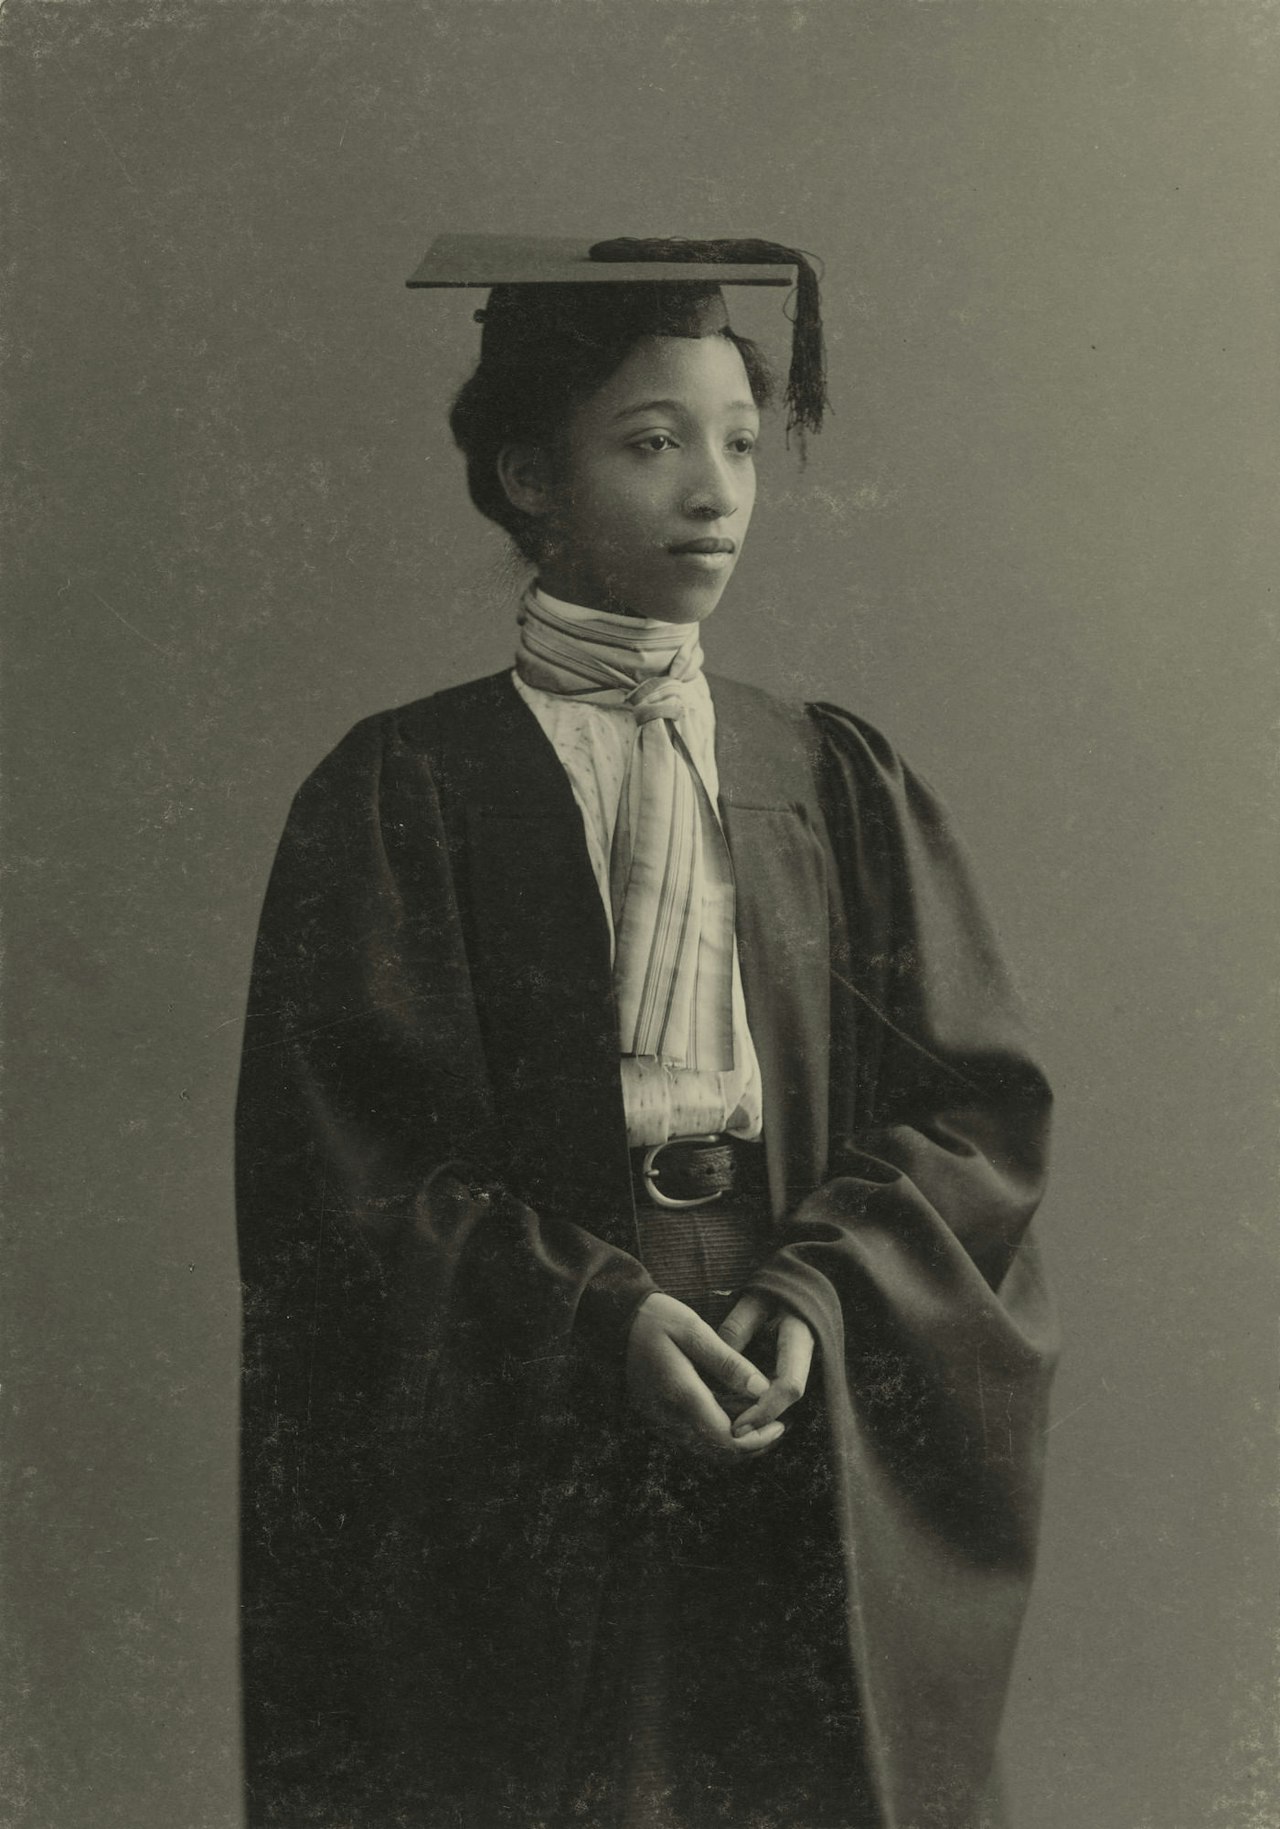 Portrait of Alberta Virginia Scott at graduation.